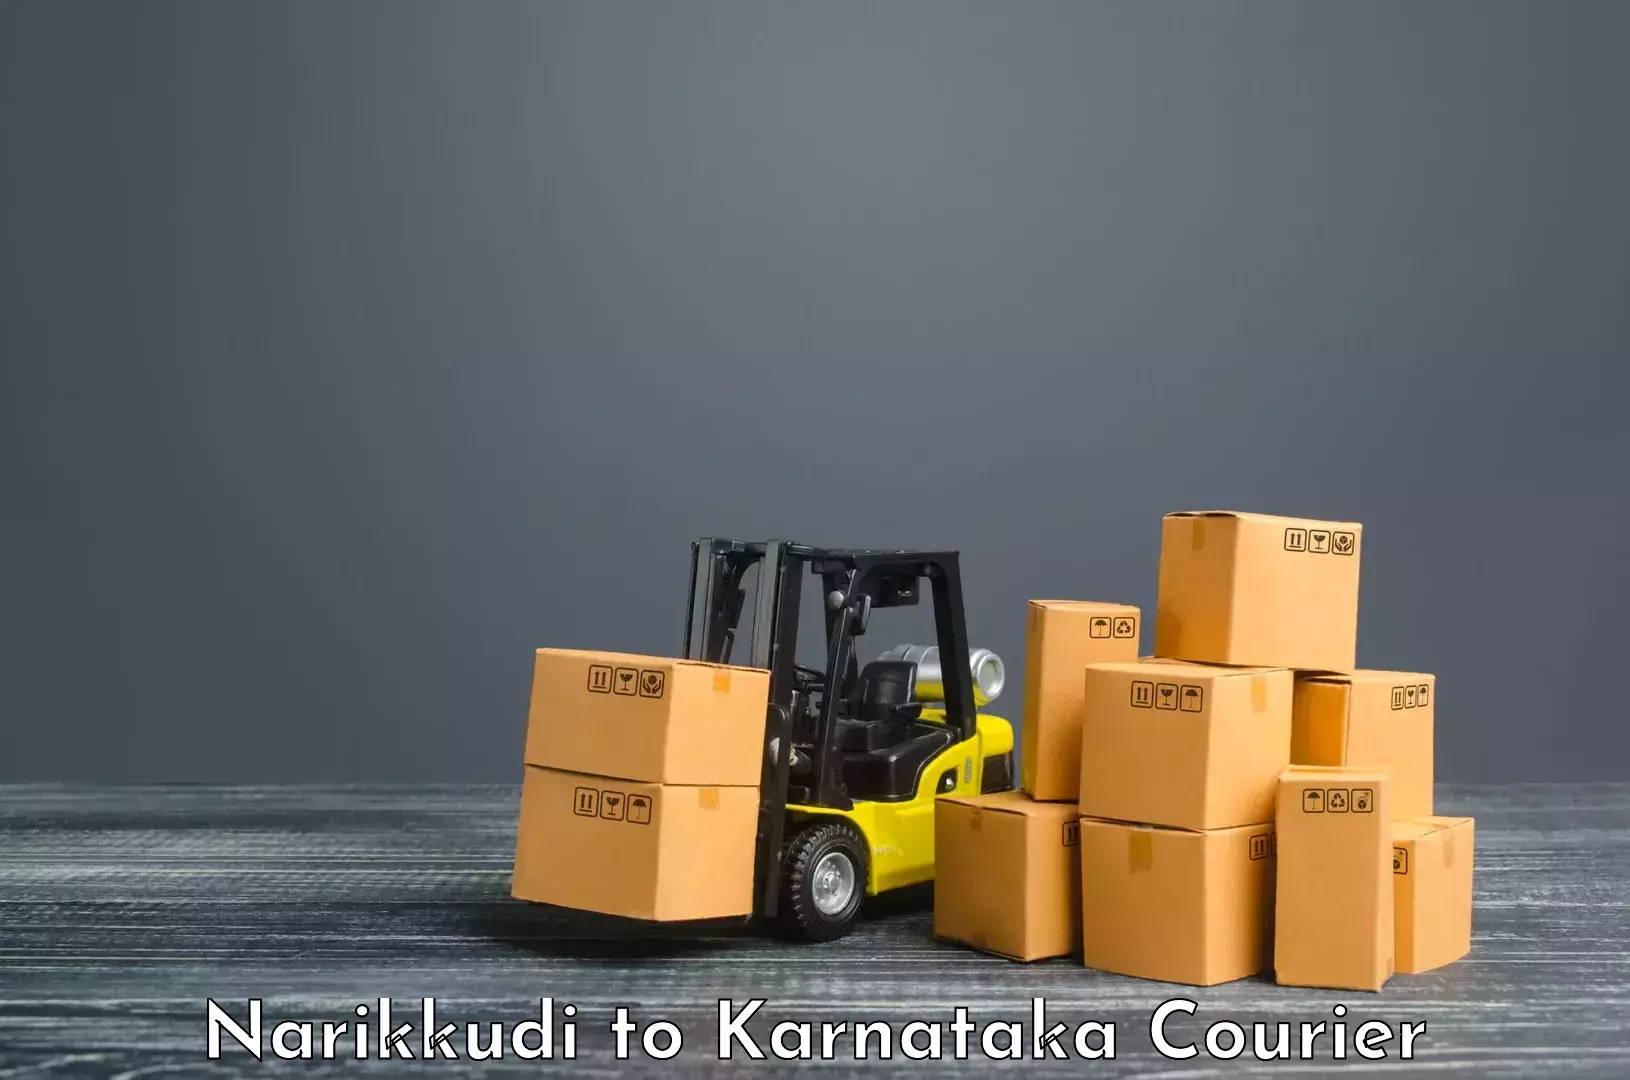 Cash on delivery service Narikkudi to Karnataka